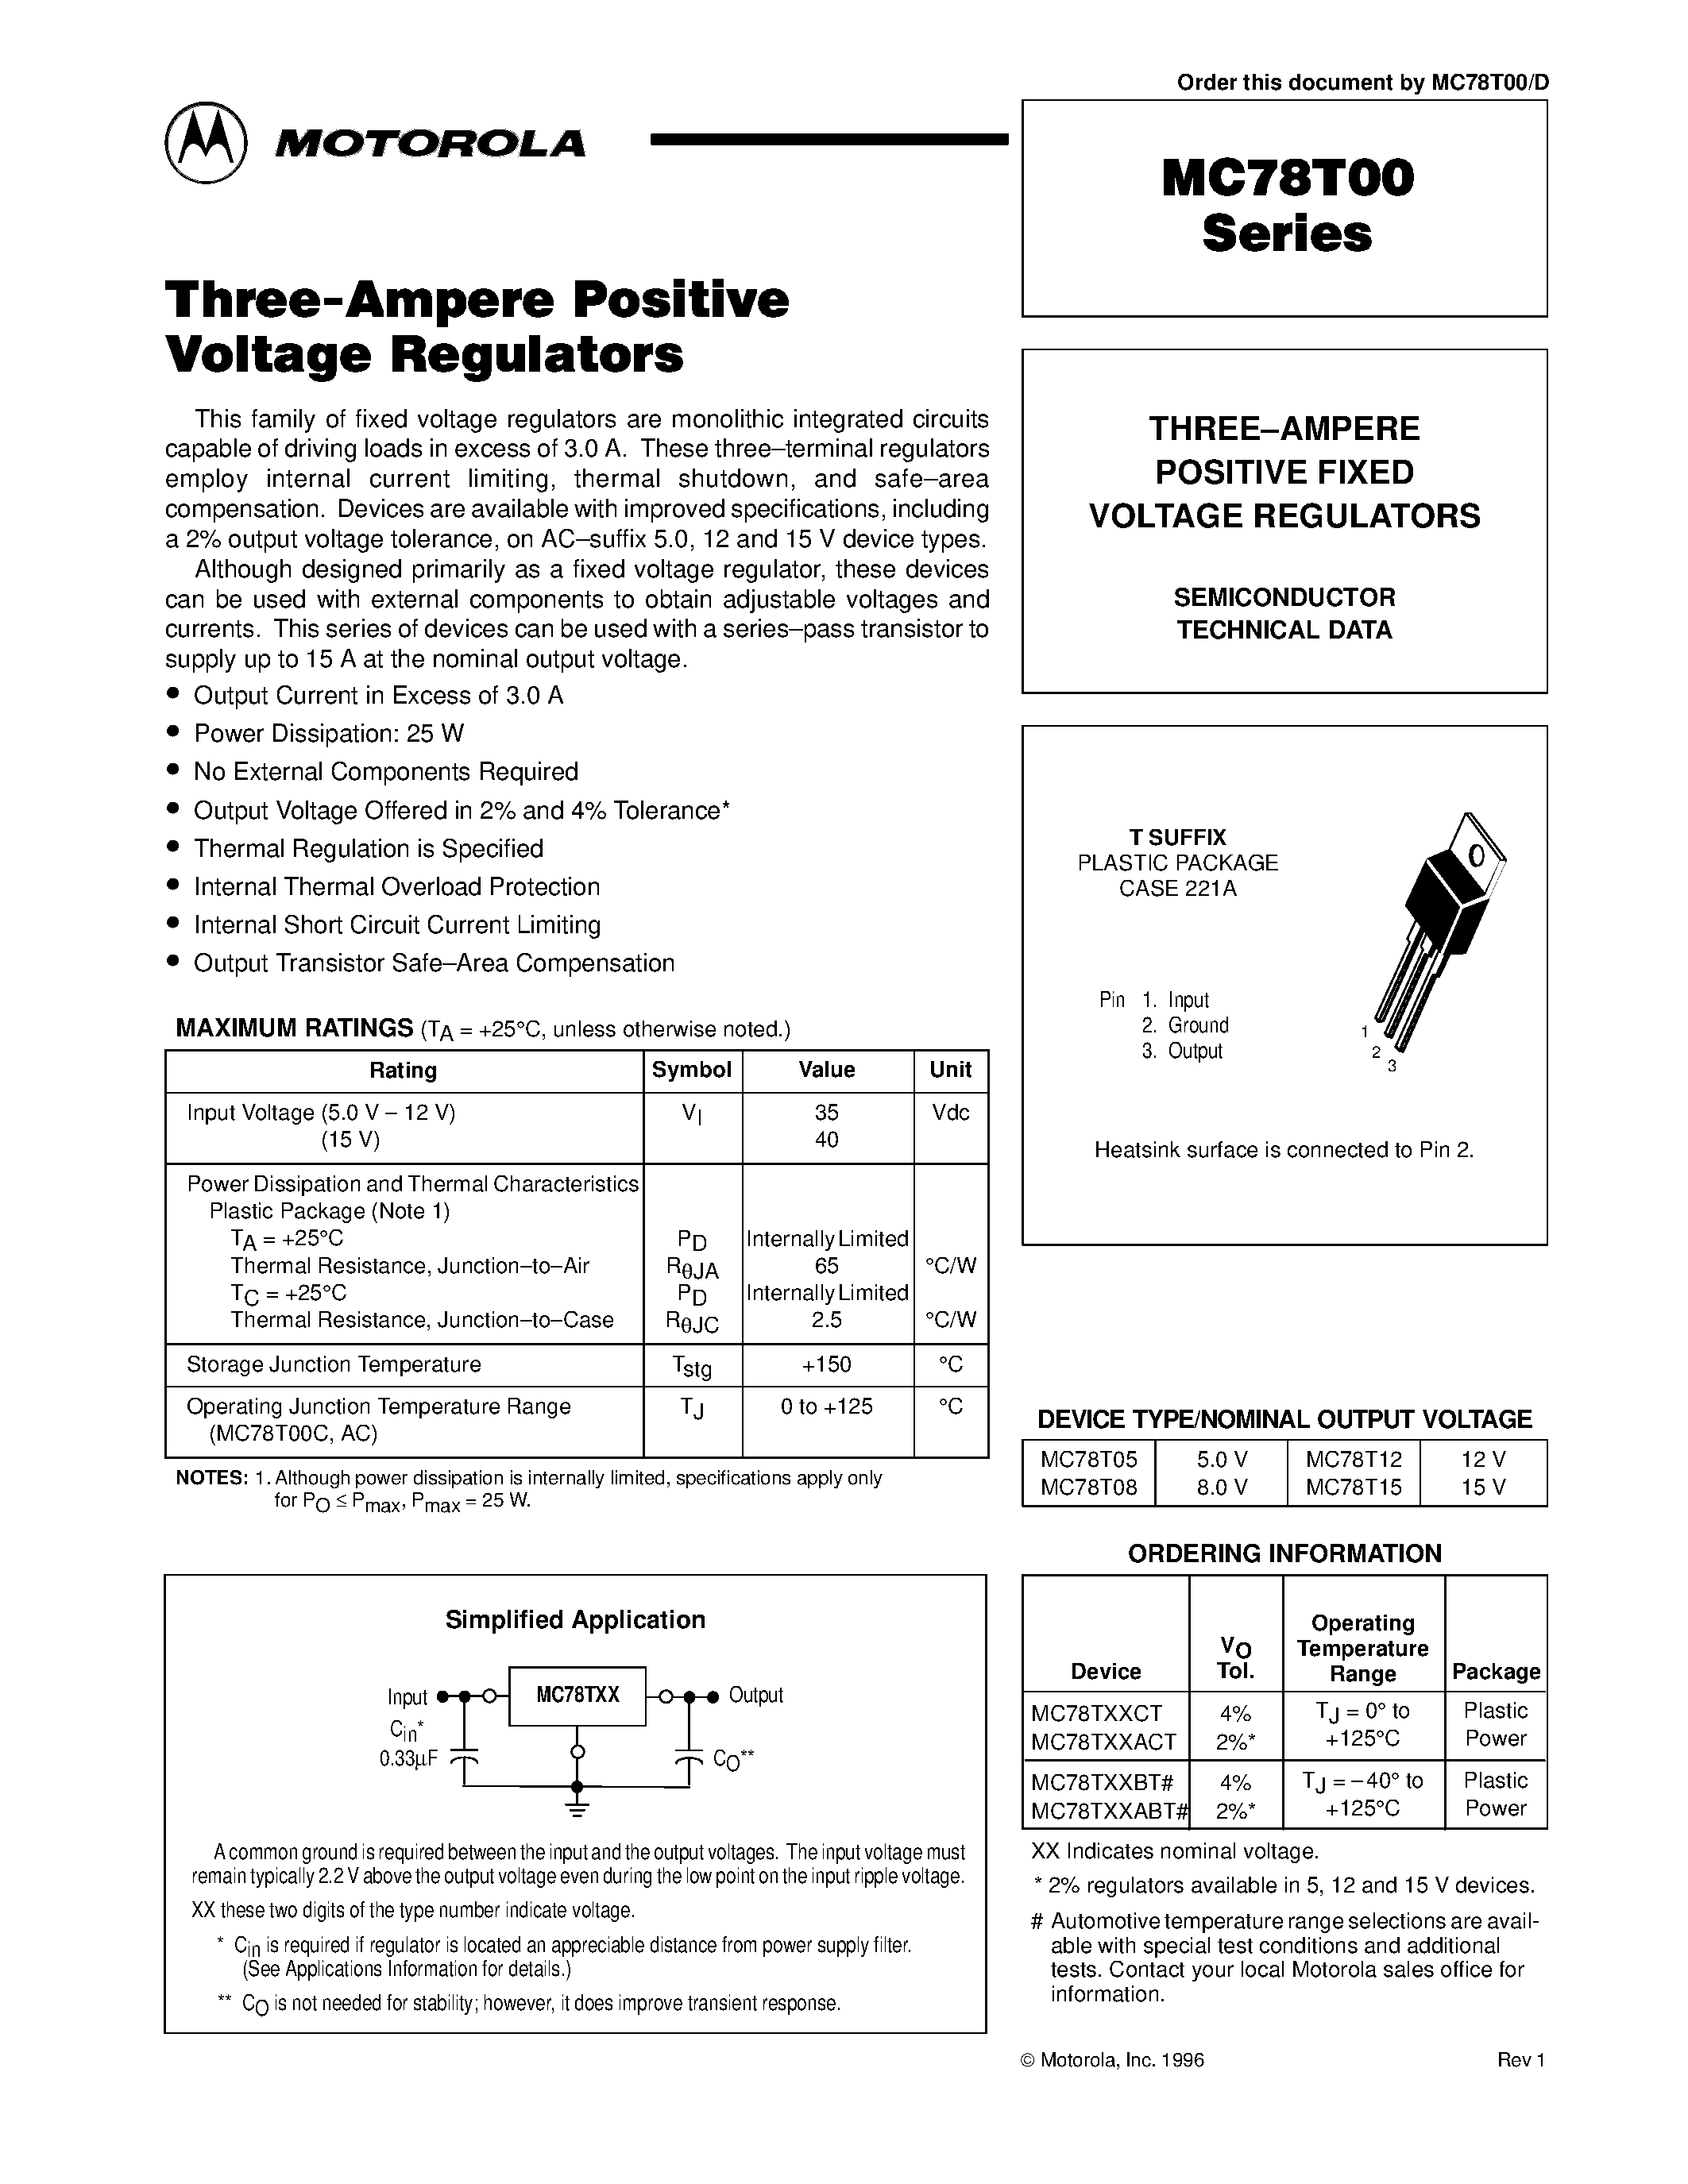 Datasheet MC78T08ACT - THREE-AMPERE POSITIVE FIXED VOLTAGE REGULATORS page 1